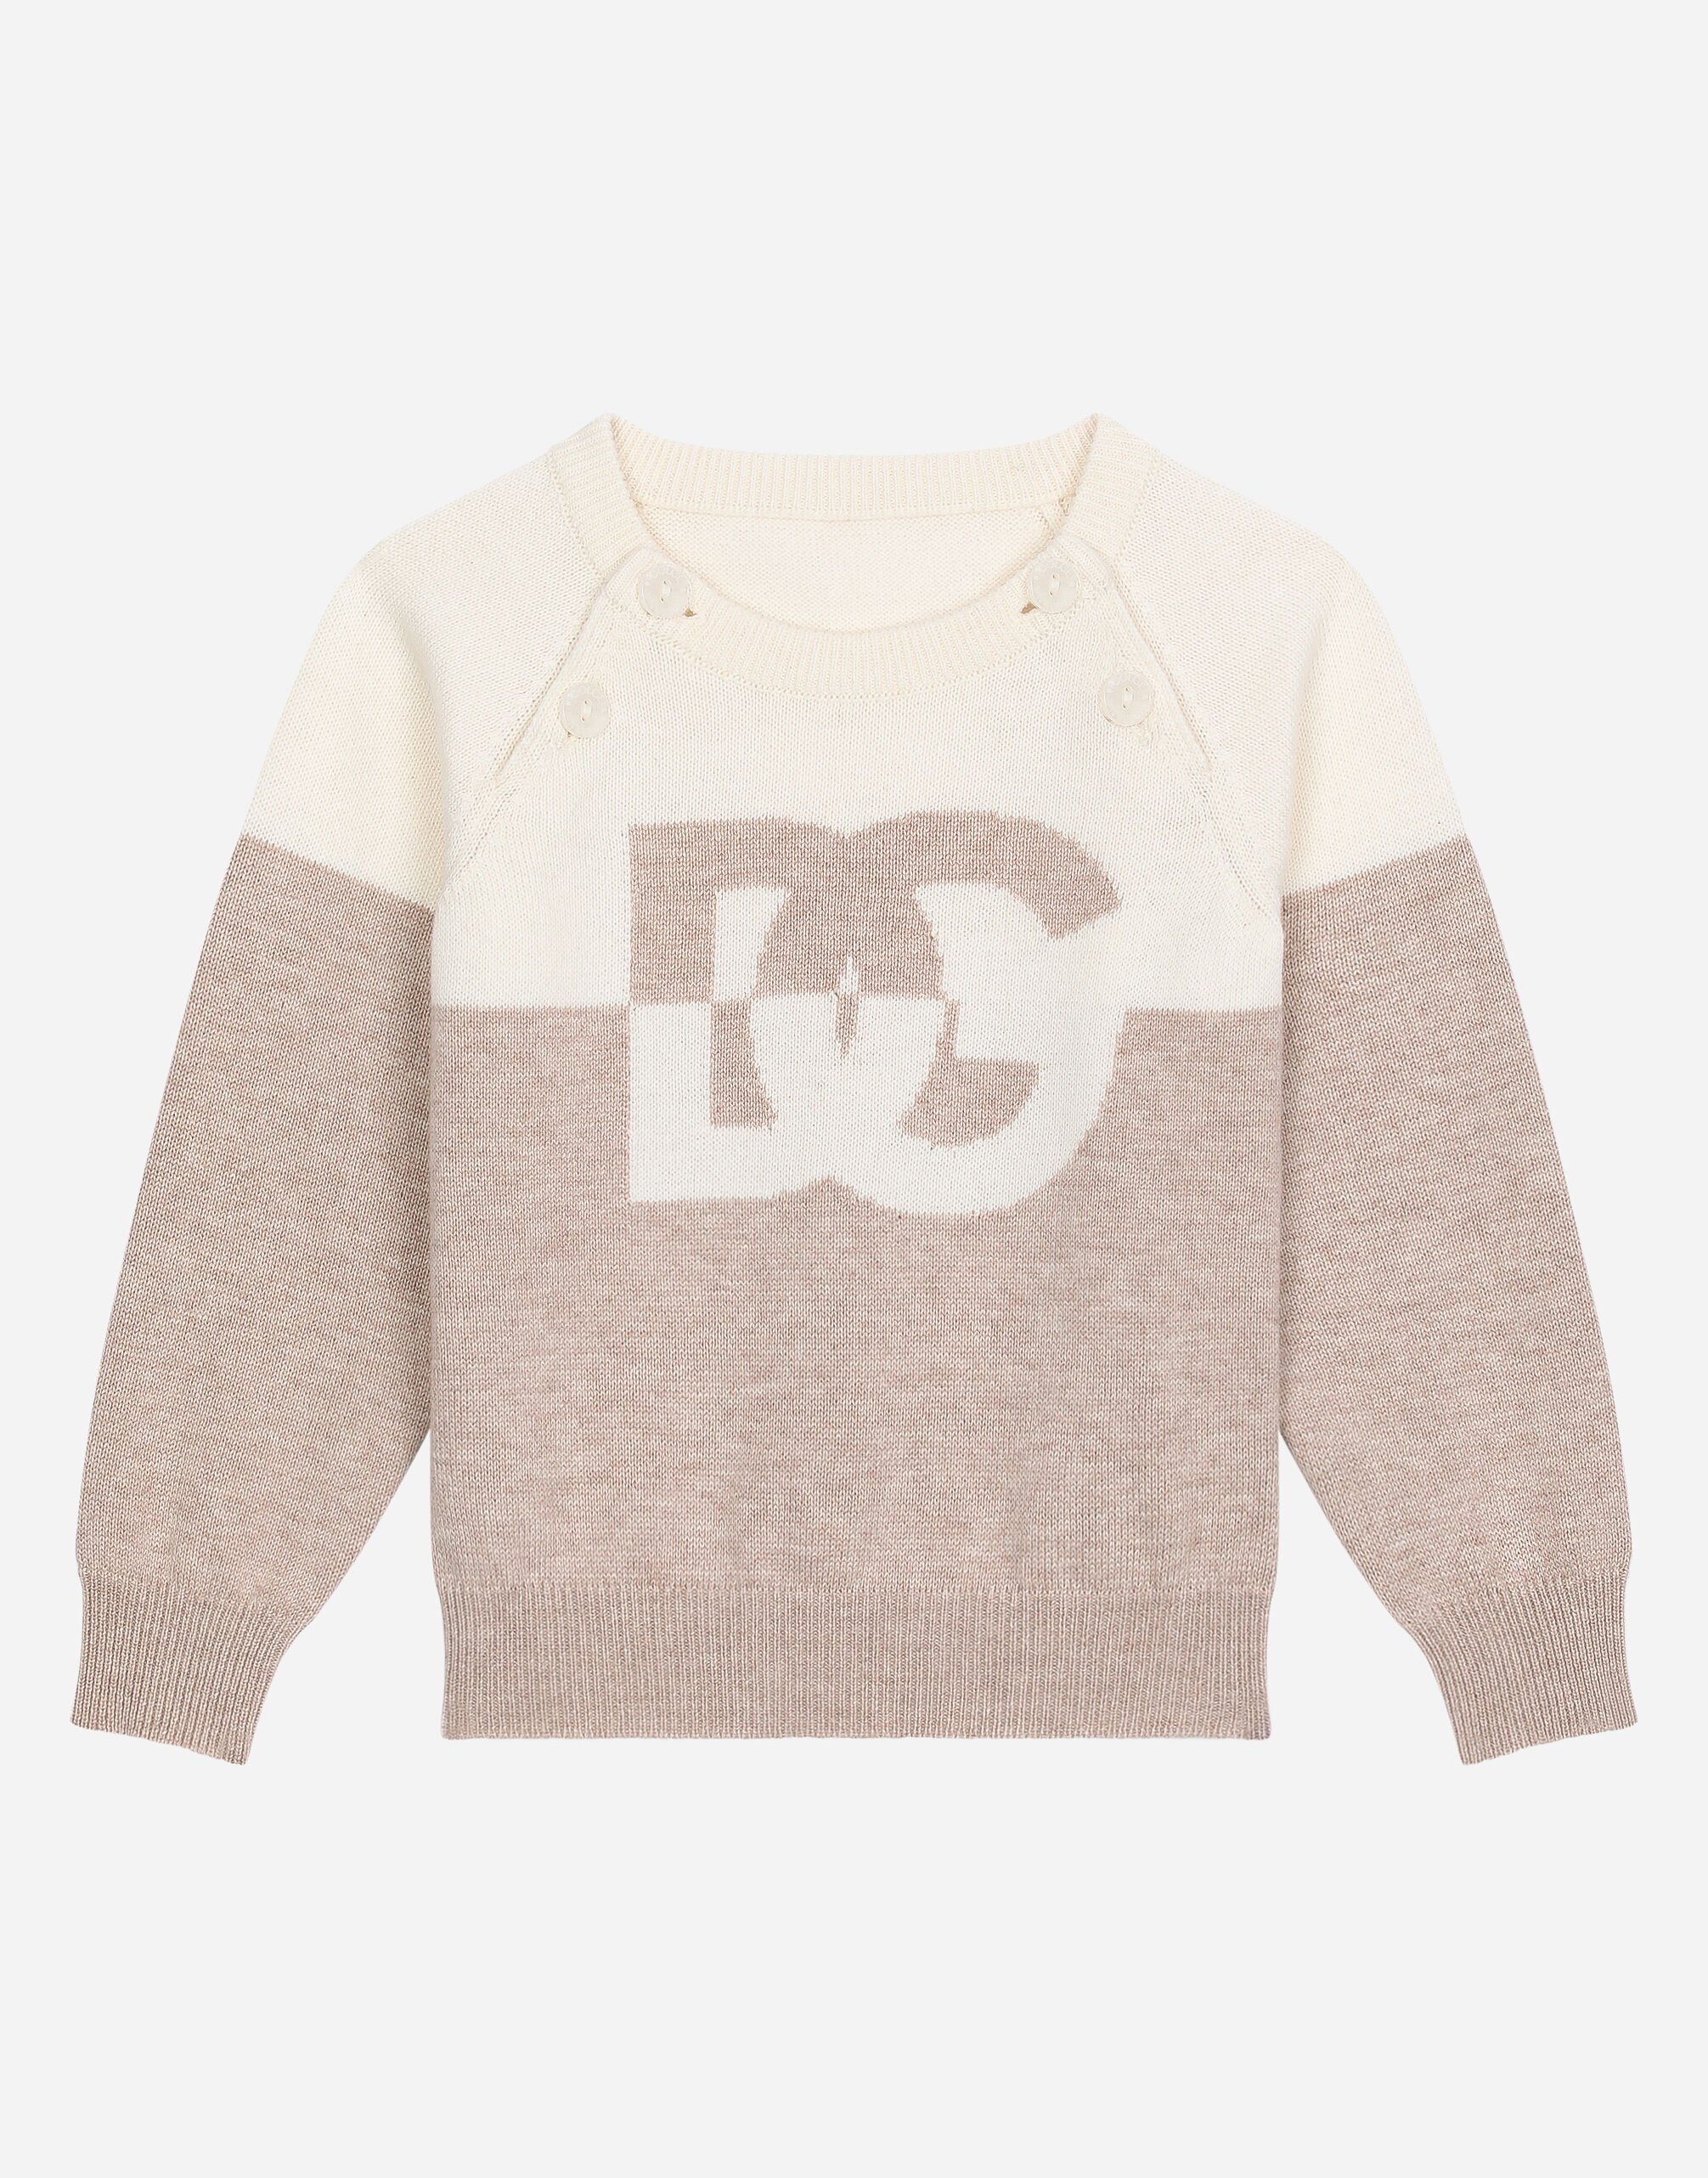 Dolce & Gabbana Plain-knit cotton sweatshirt with DG logo White L1JTEYG7K7R